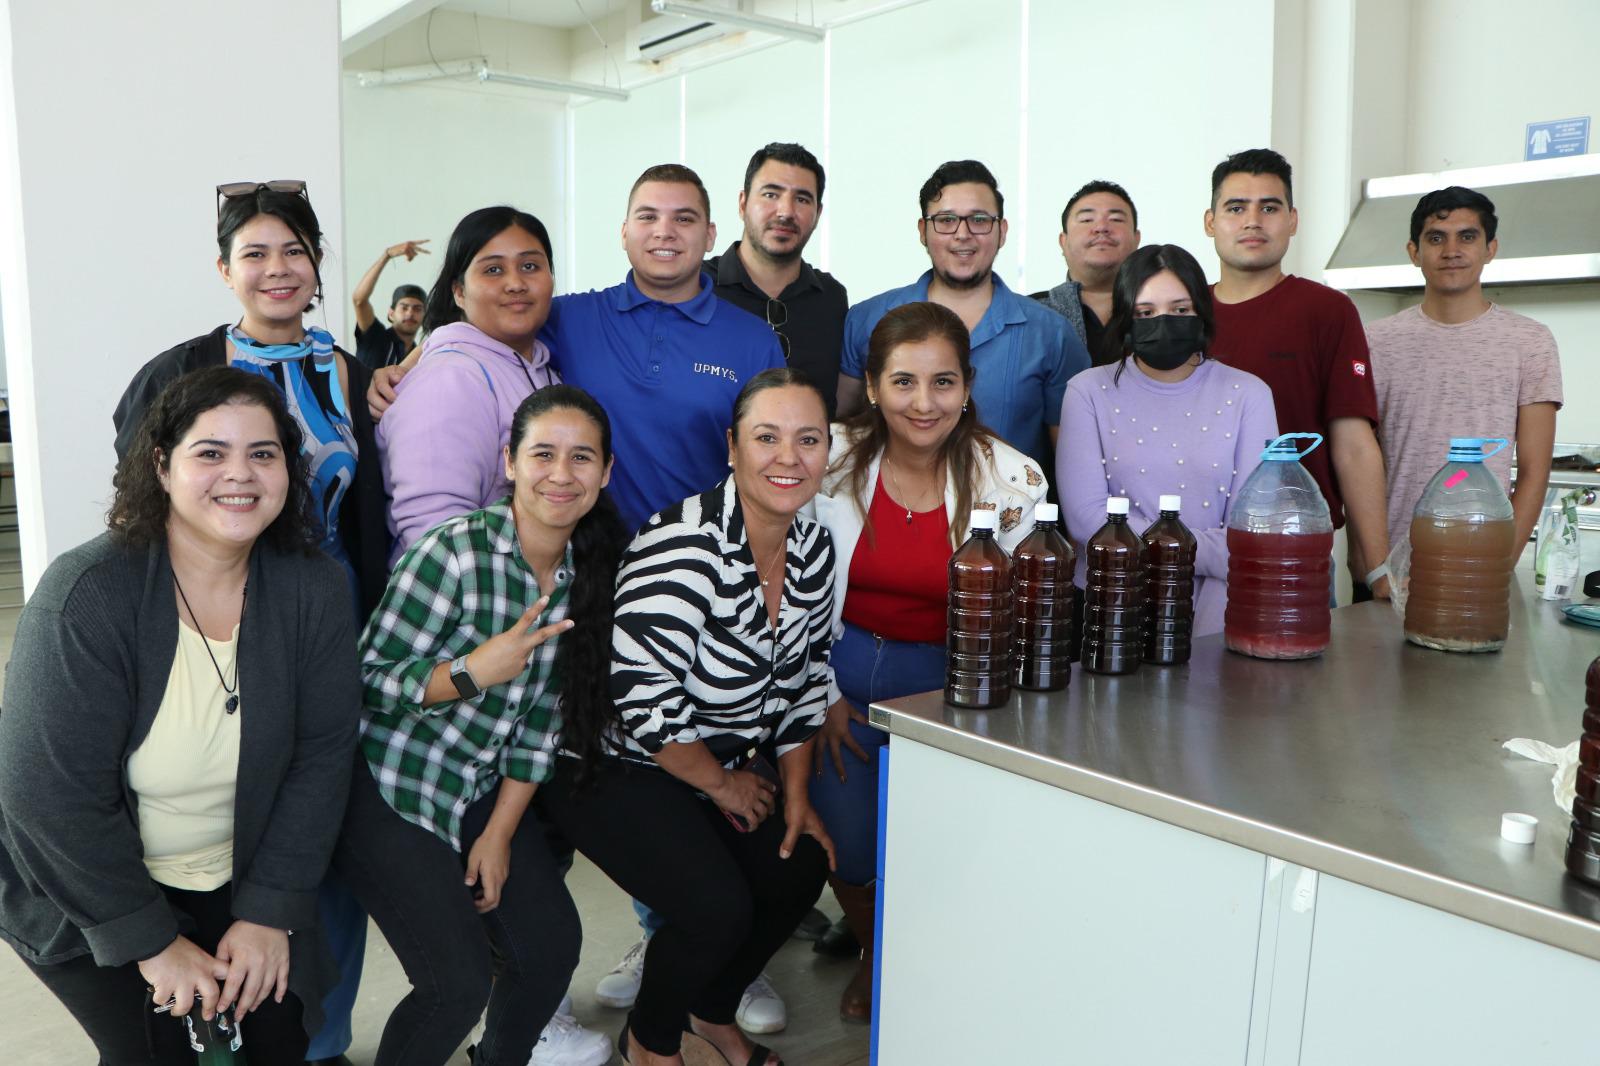 $!Sectur Sinaloa concluye taller de cerveza artesanal en la UPMyS